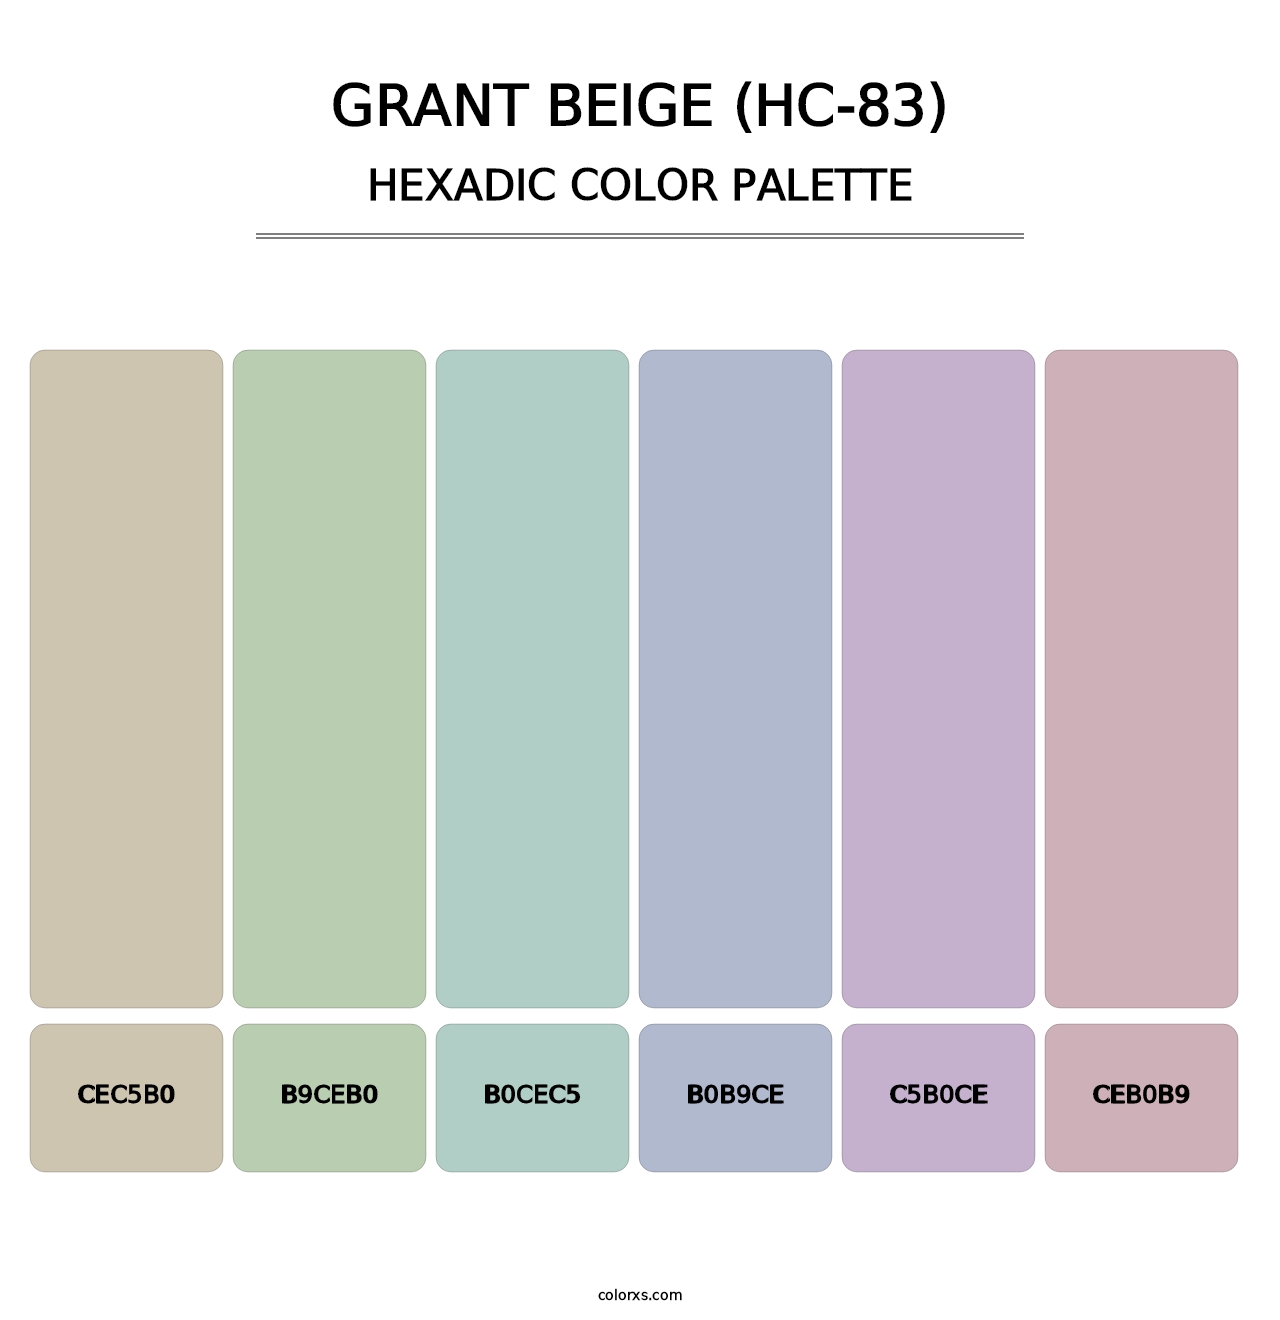 Grant Beige (HC-83) - Hexadic Color Palette